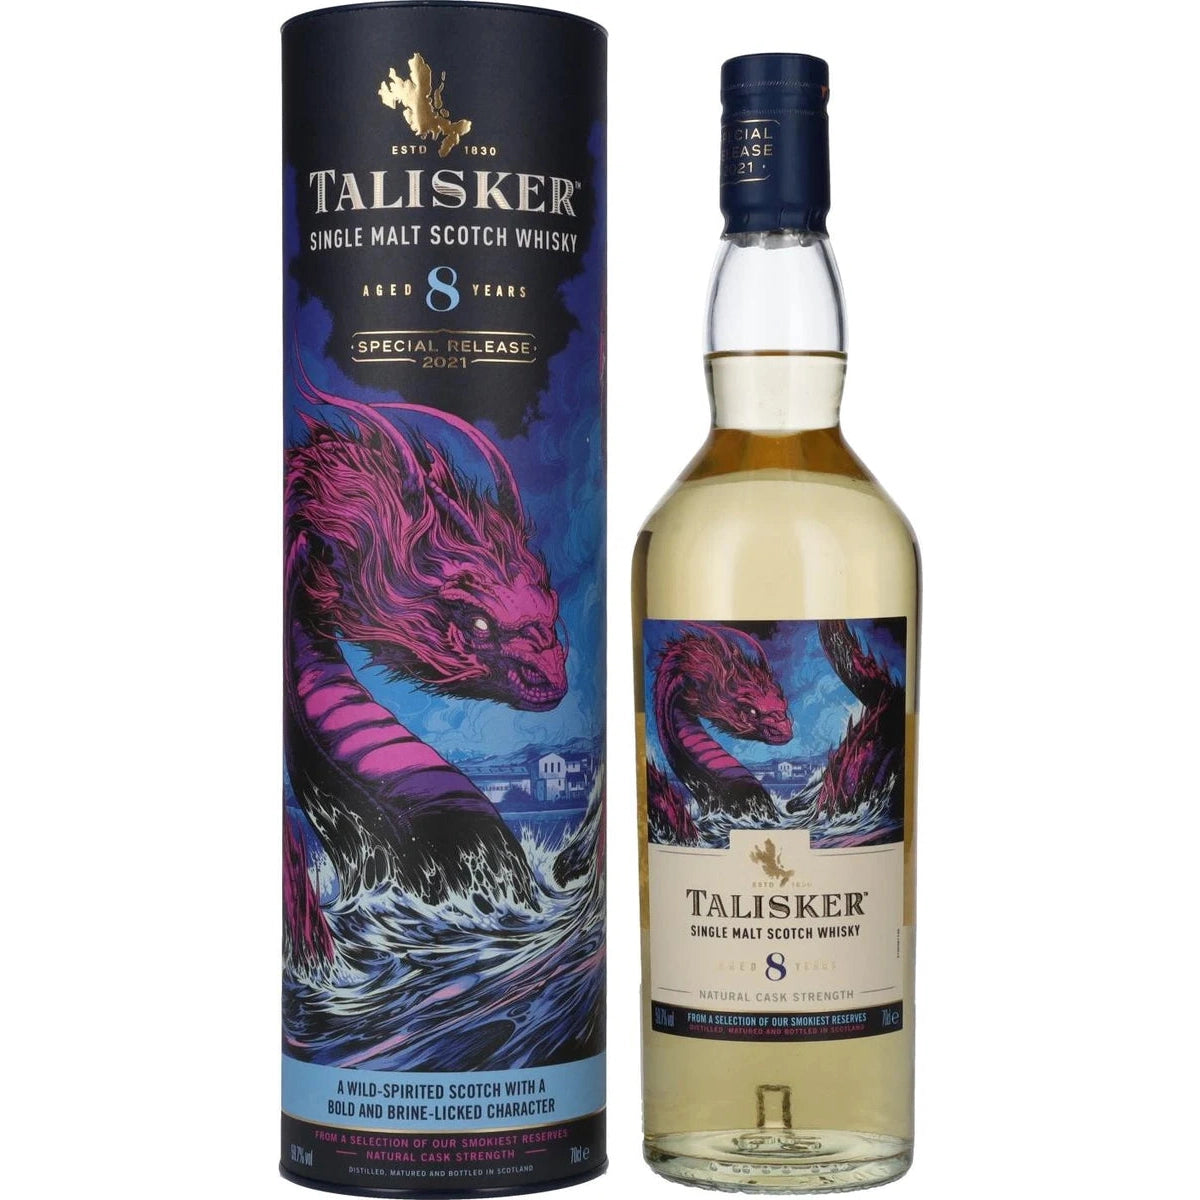 Talisker 8 Years Old Single Malt Special Release 2021 59,7% Vol. 0,7l in Giftbox